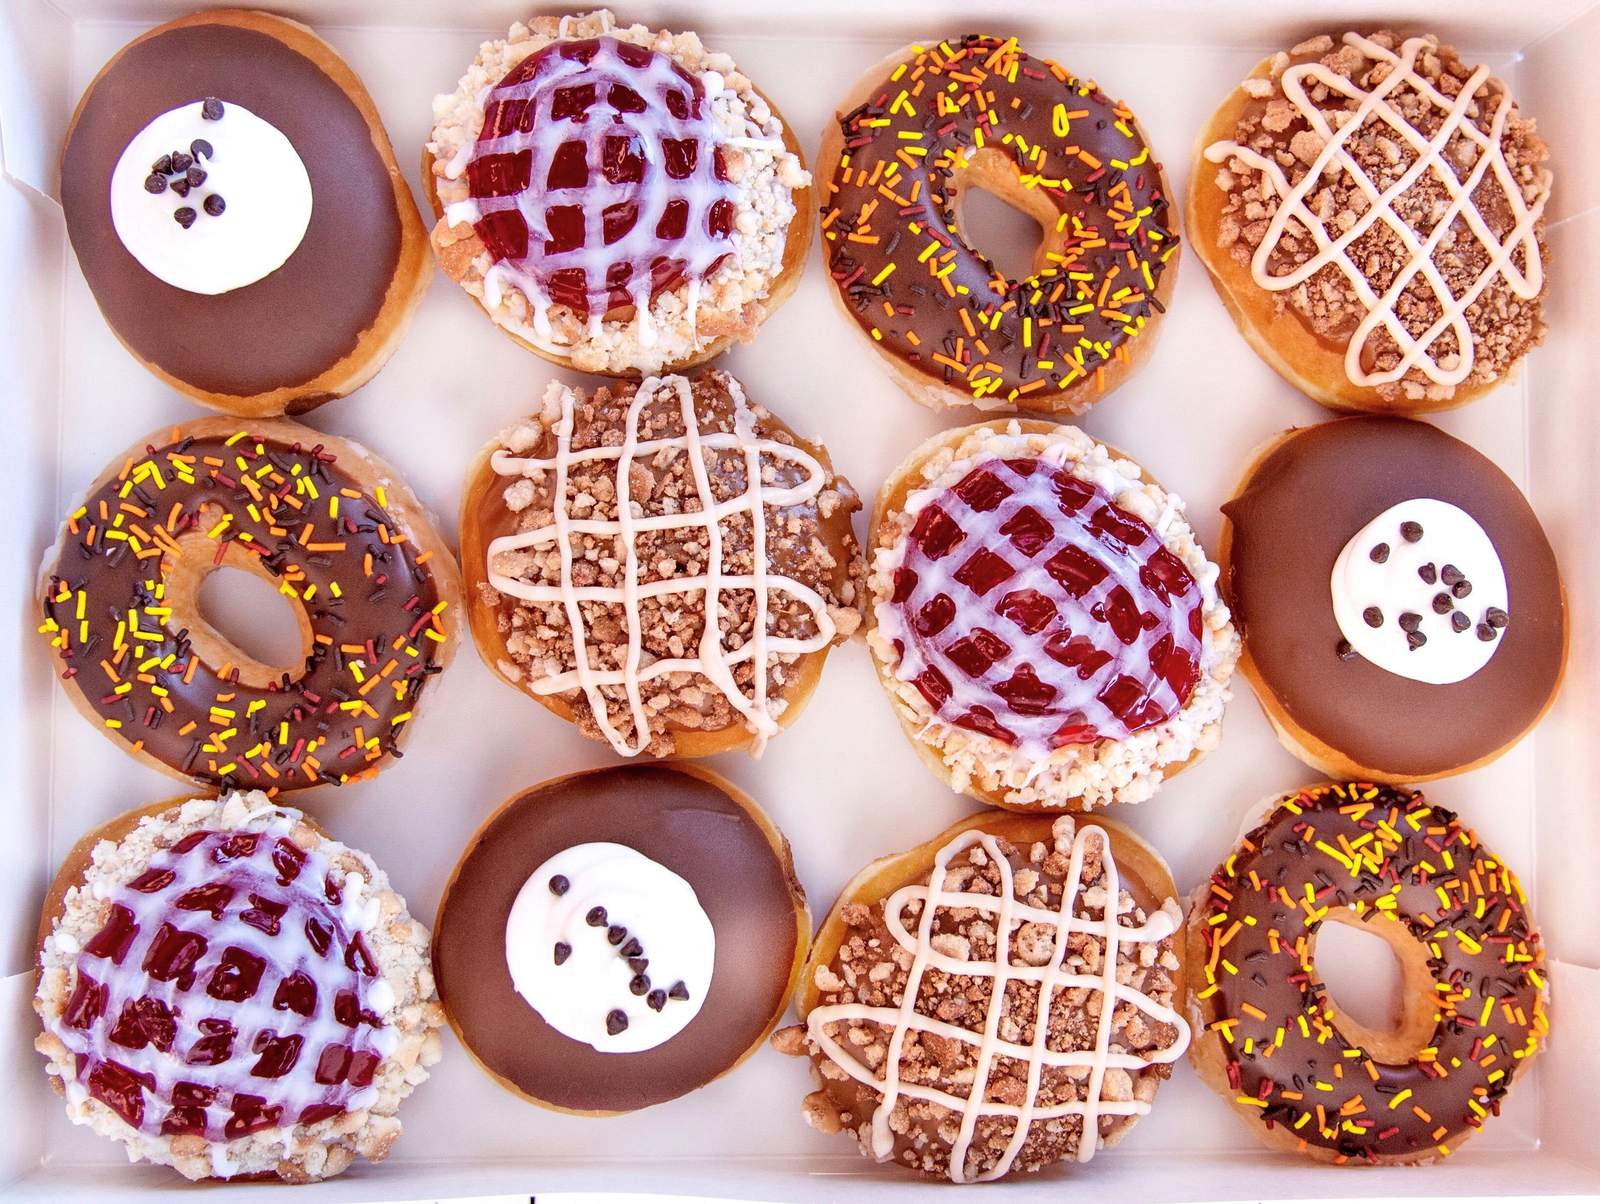 Krispy Kreme celebrates Friendsgiving with $13 double dozen offer Saturday